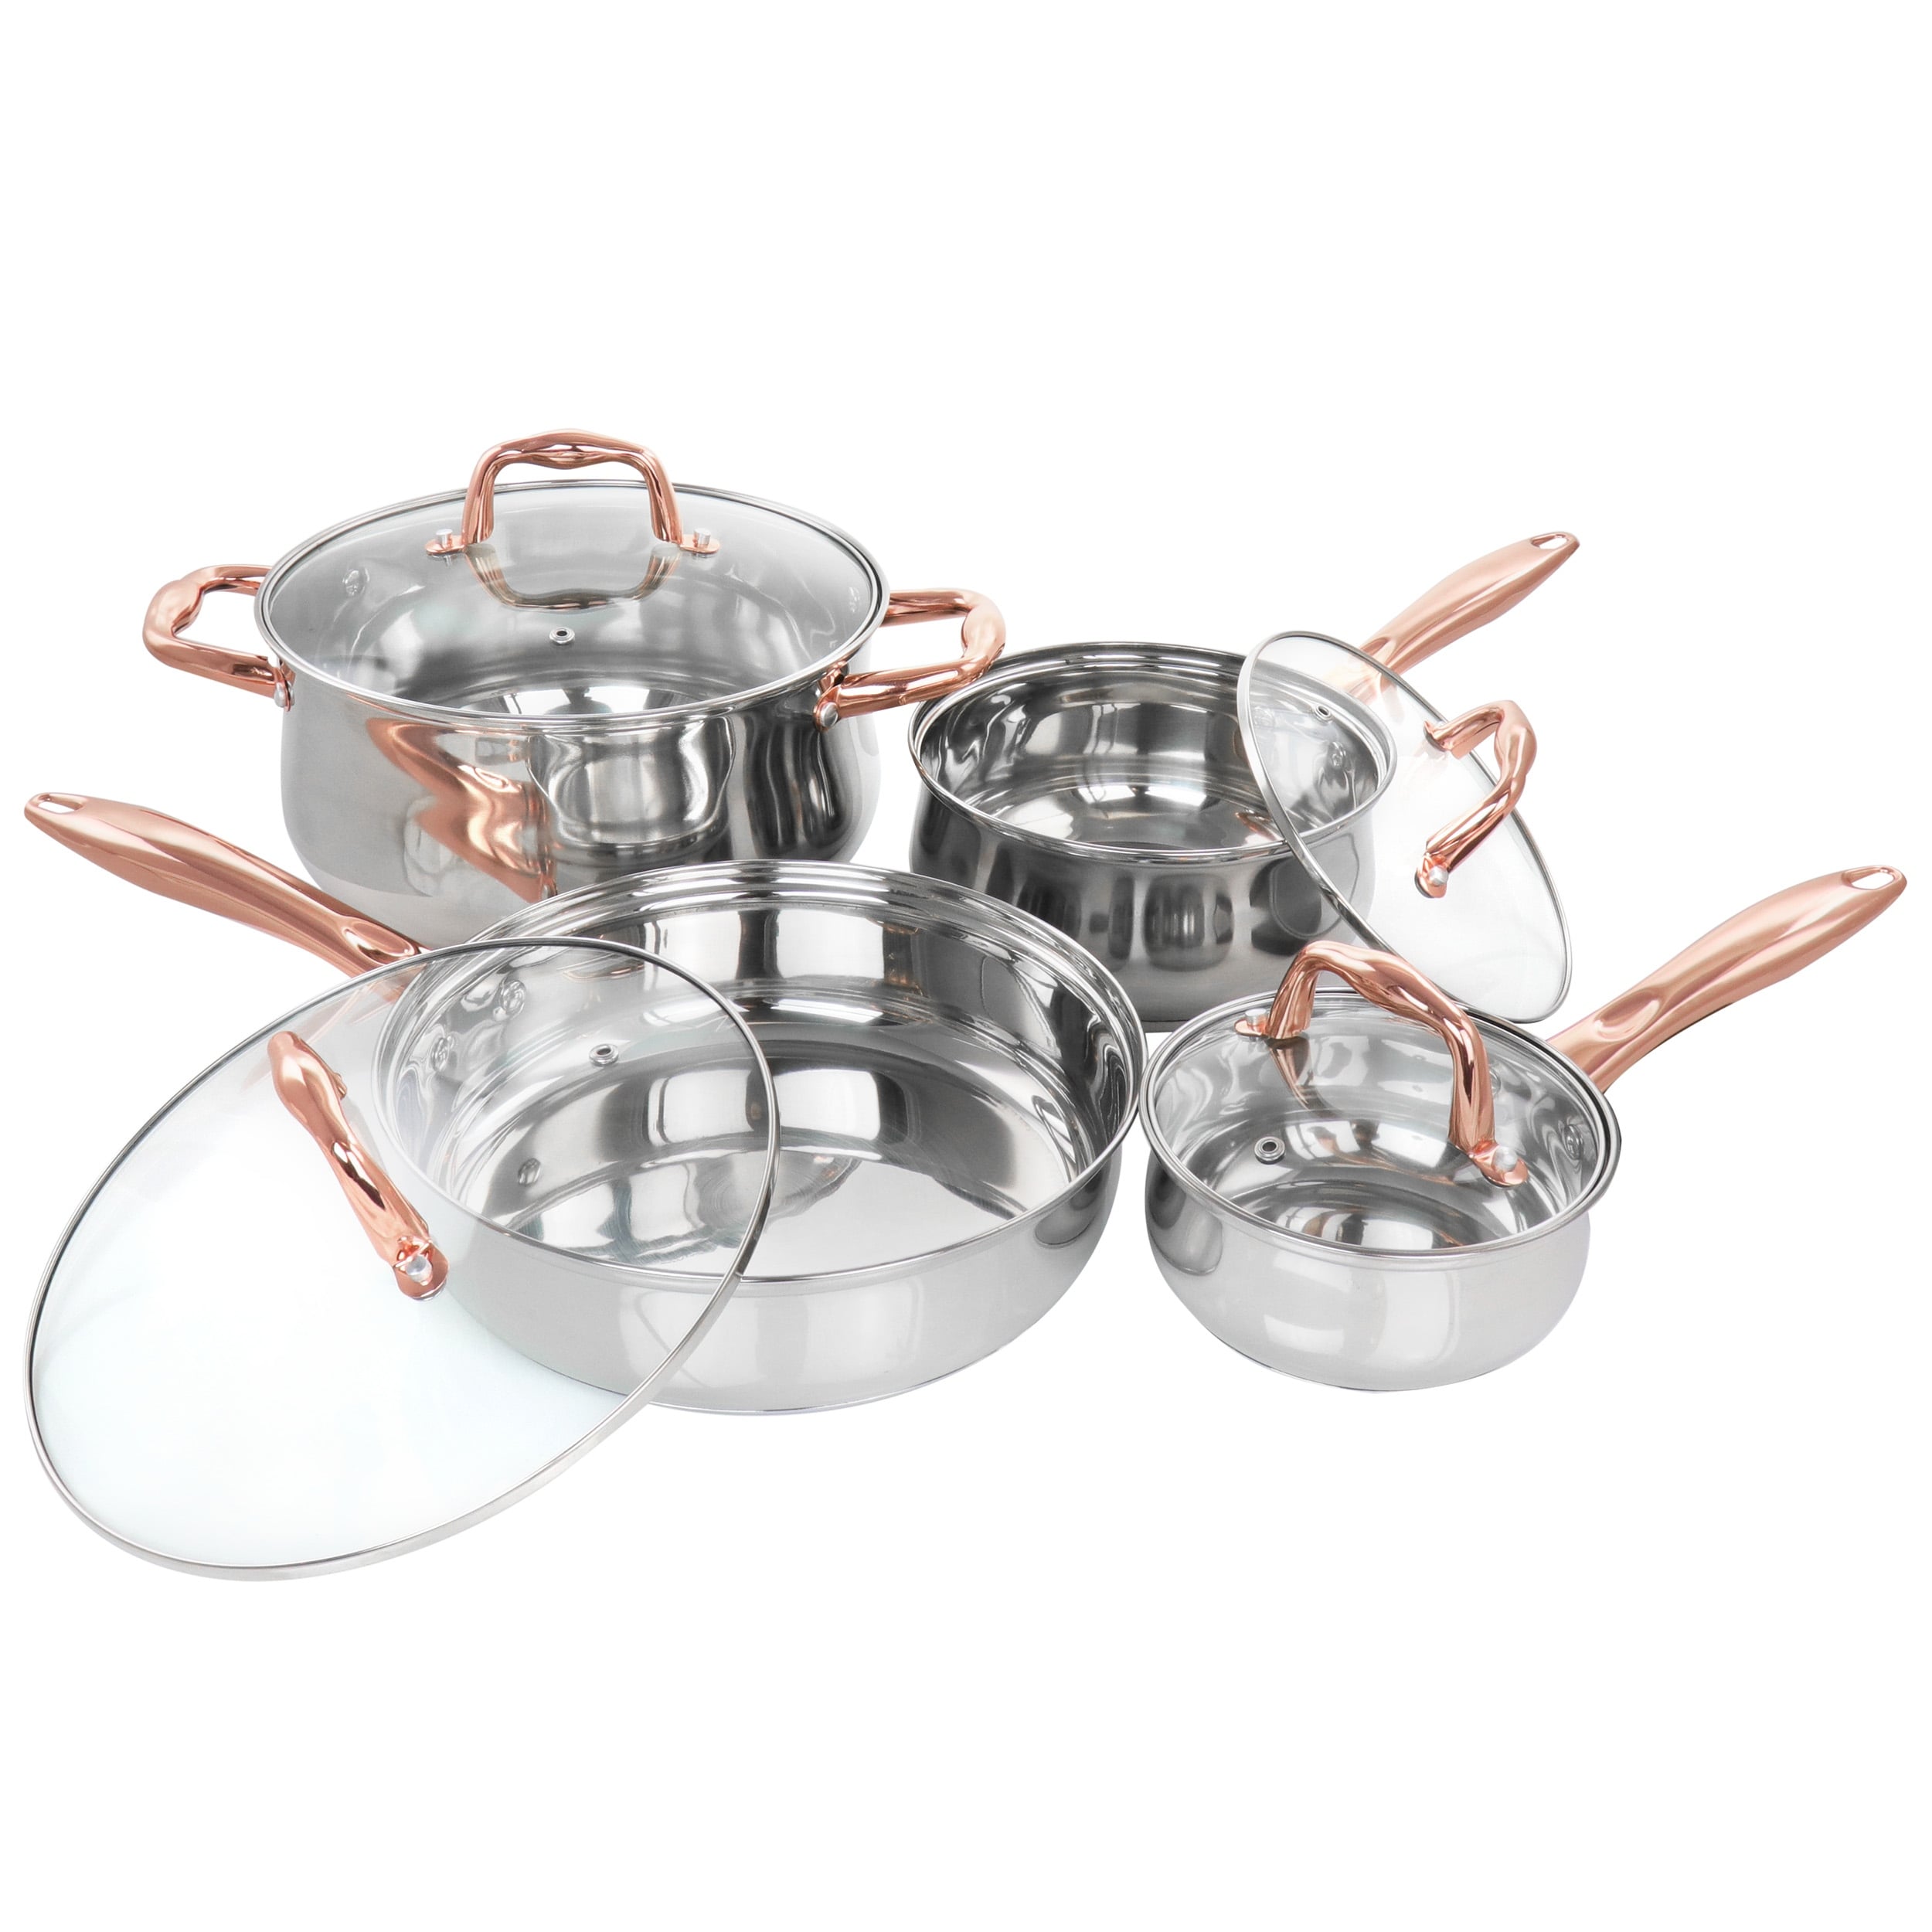 Korkmaz korkmaz vintage cookware set, 5 pcs nonstick pot set with lid